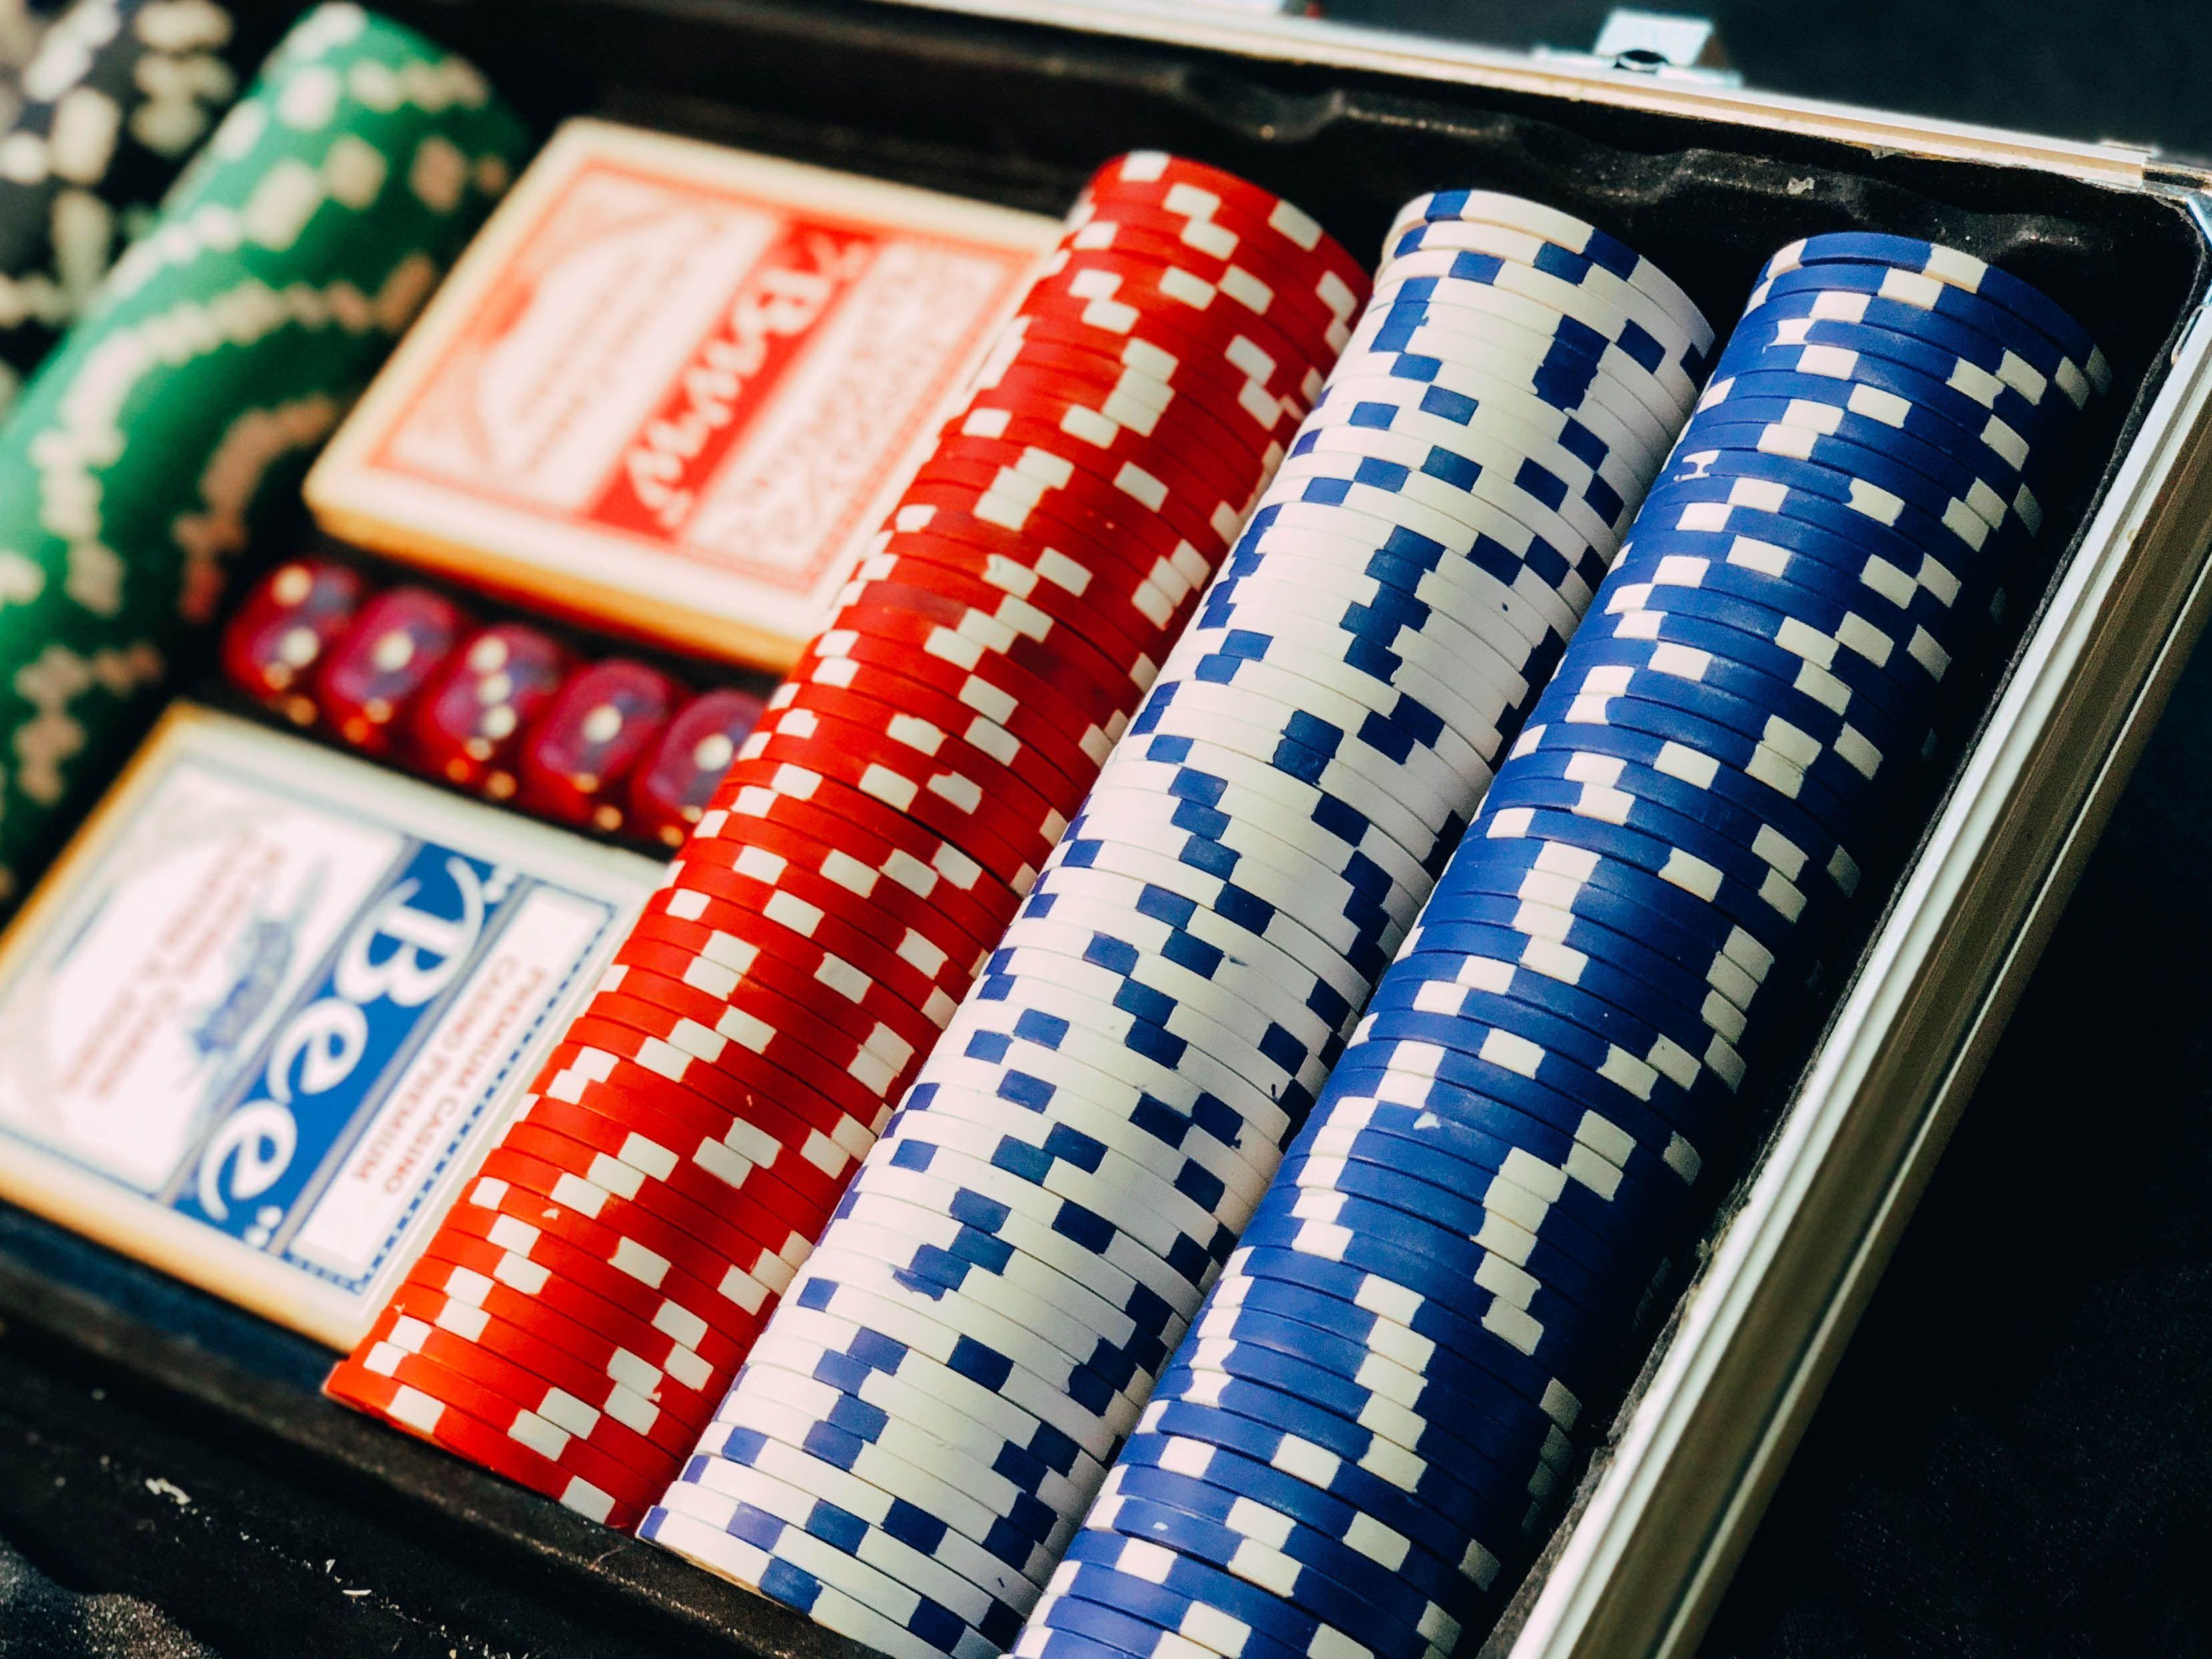 Ideias de prendas para entusiastas de casinos: Escolha o presente perfeito